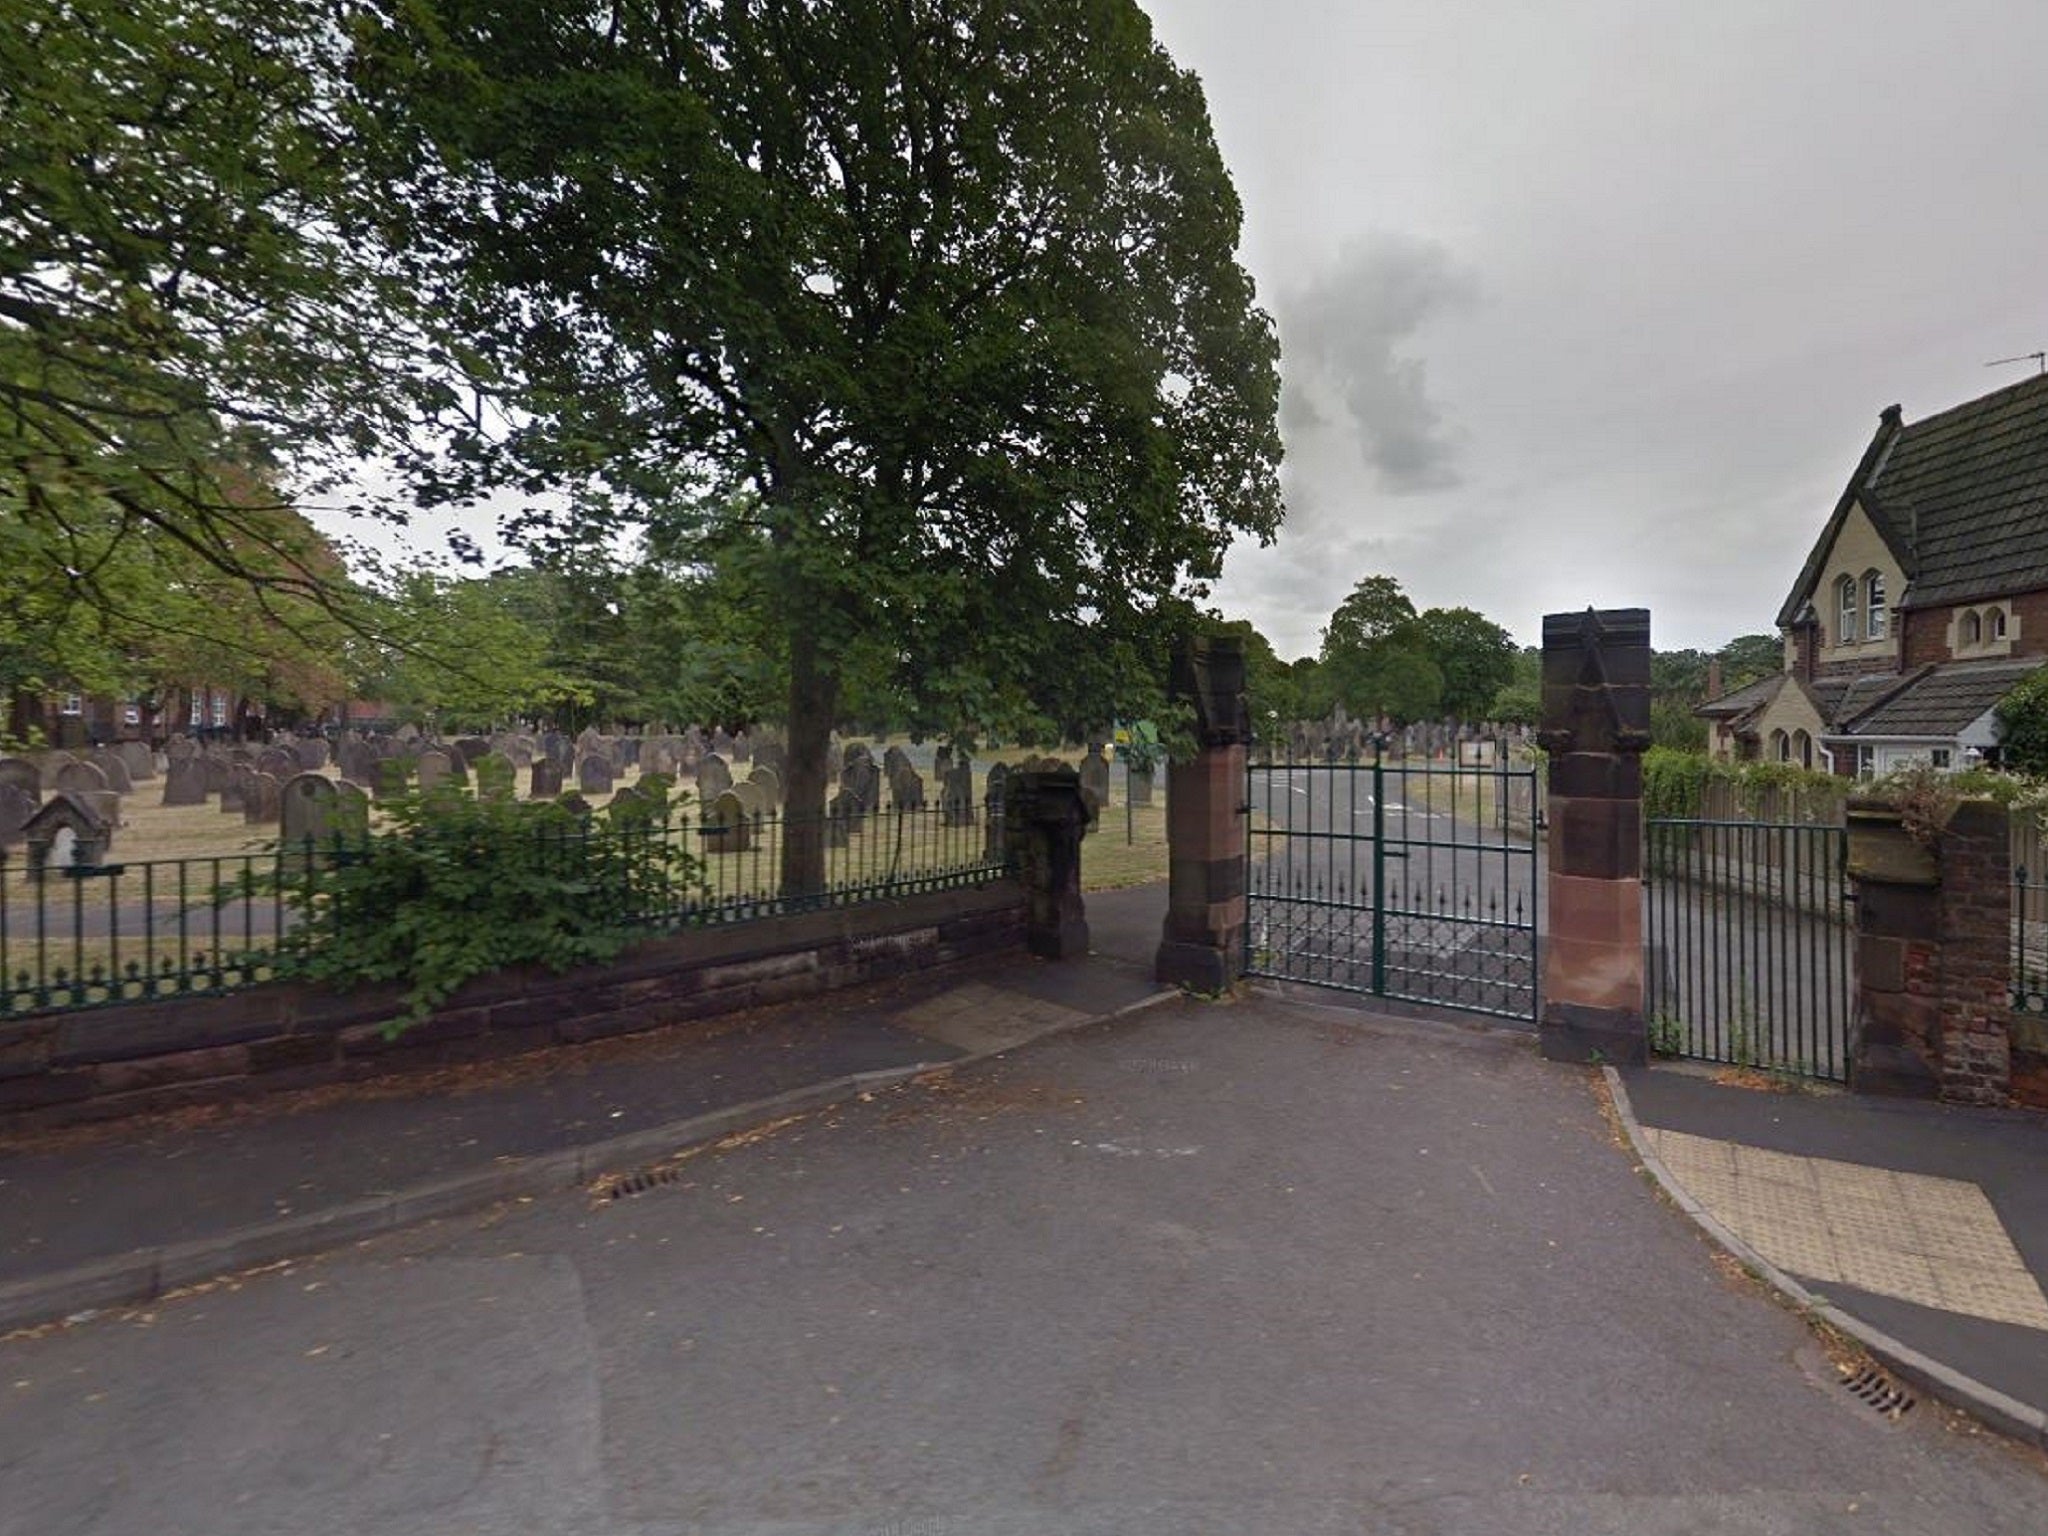 Google street view image of Runcorn cemetery, in Cheshire.